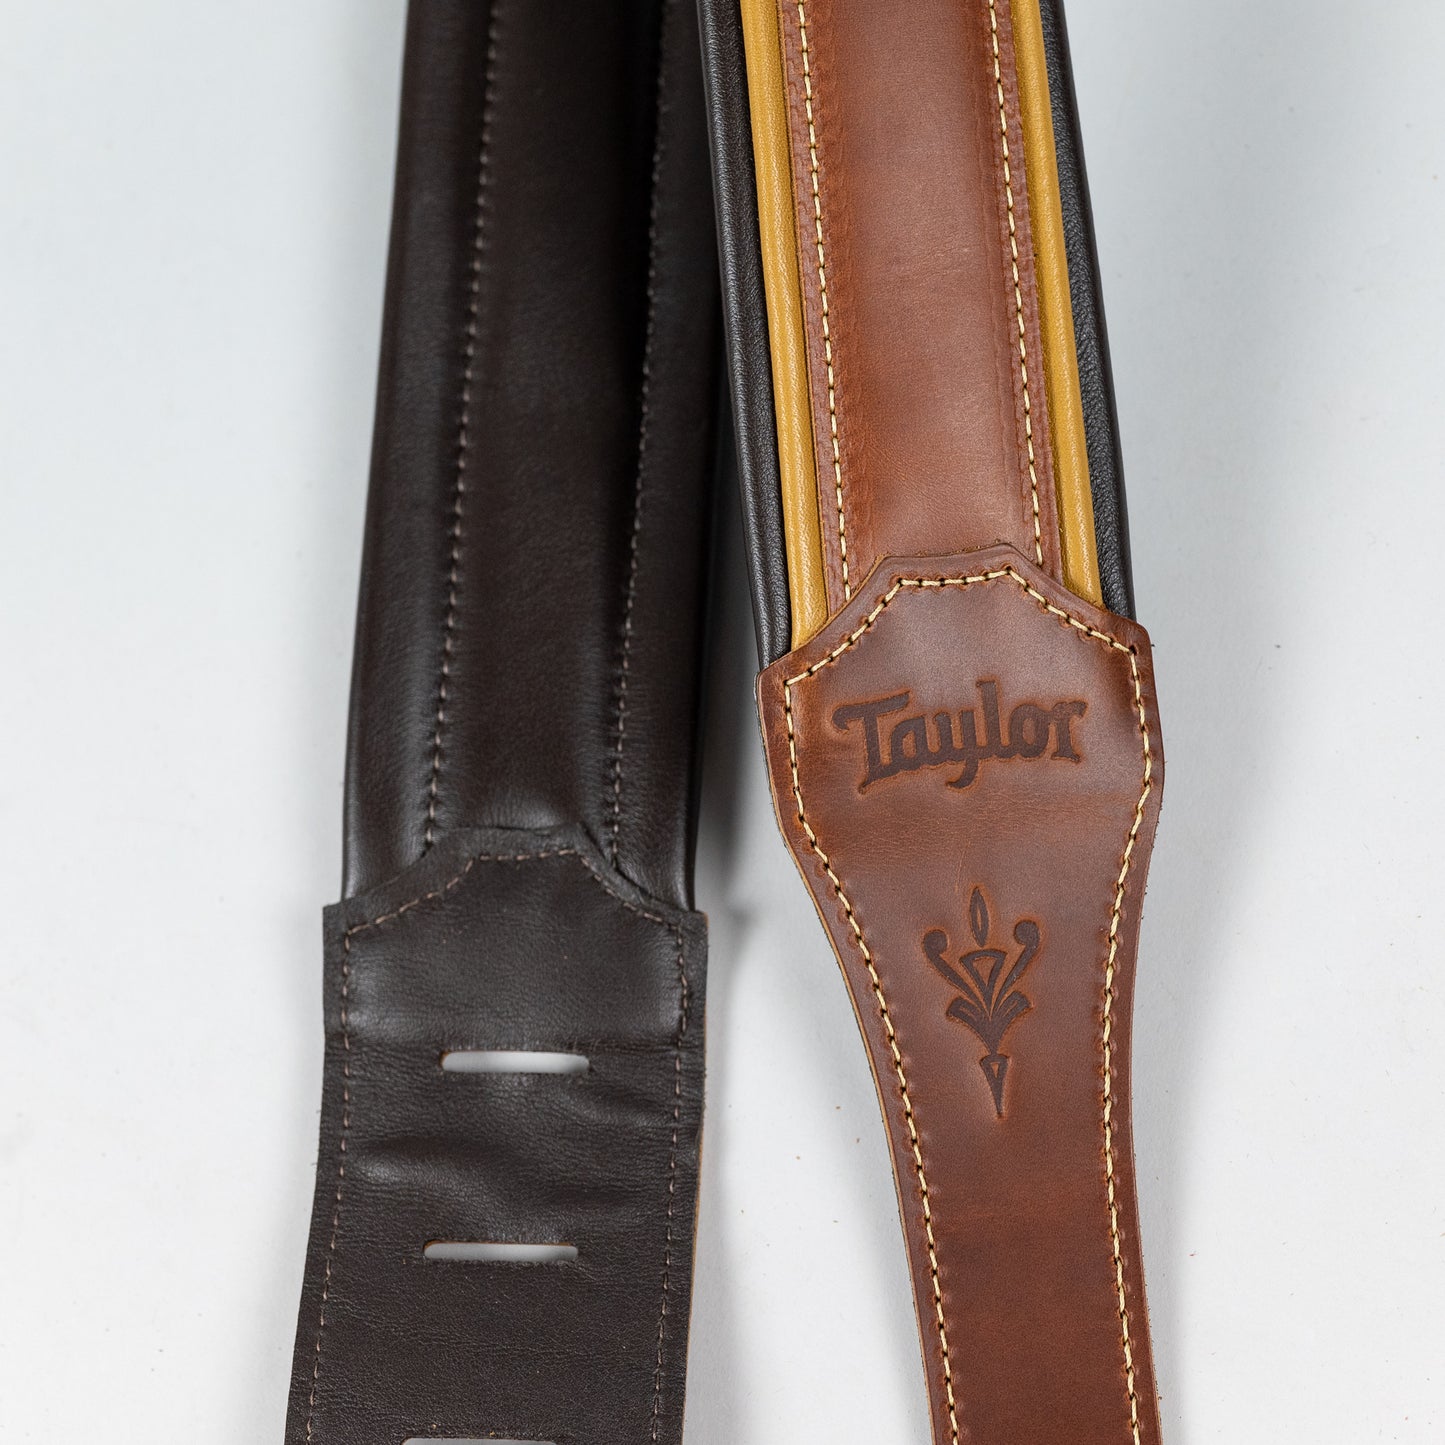 Taylor Century 2.5" Leather Guitar Strap, Medium Brown/Butterscotch/Black